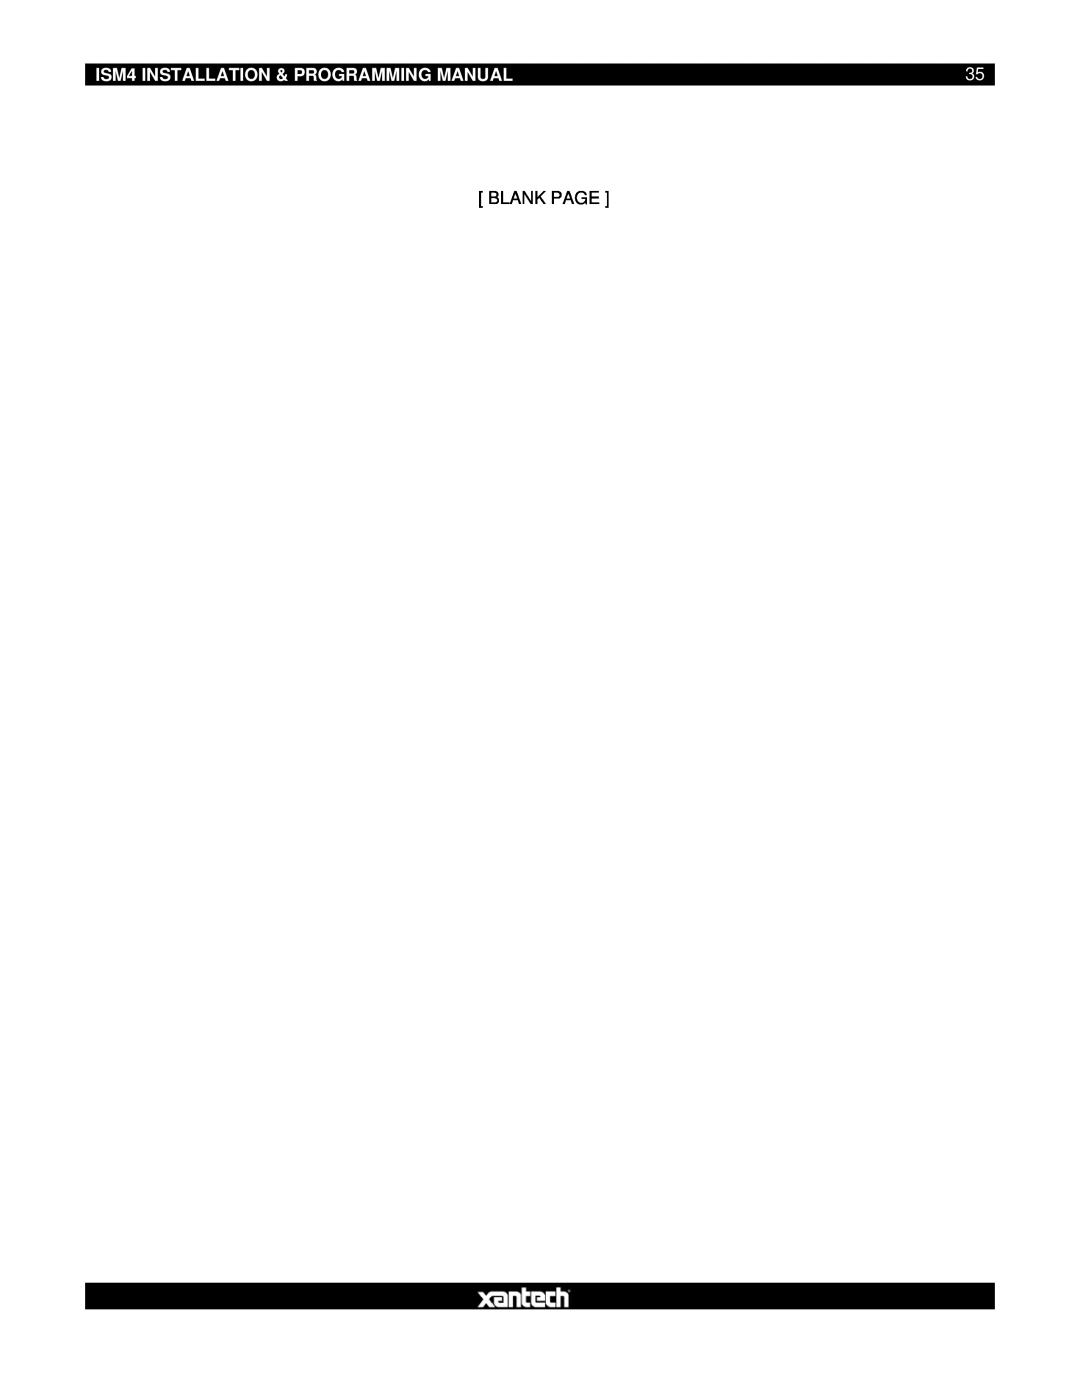 Xantech manual ISM4 INSTALLATION & PROGRAMMING MANUAL, Blank Page 